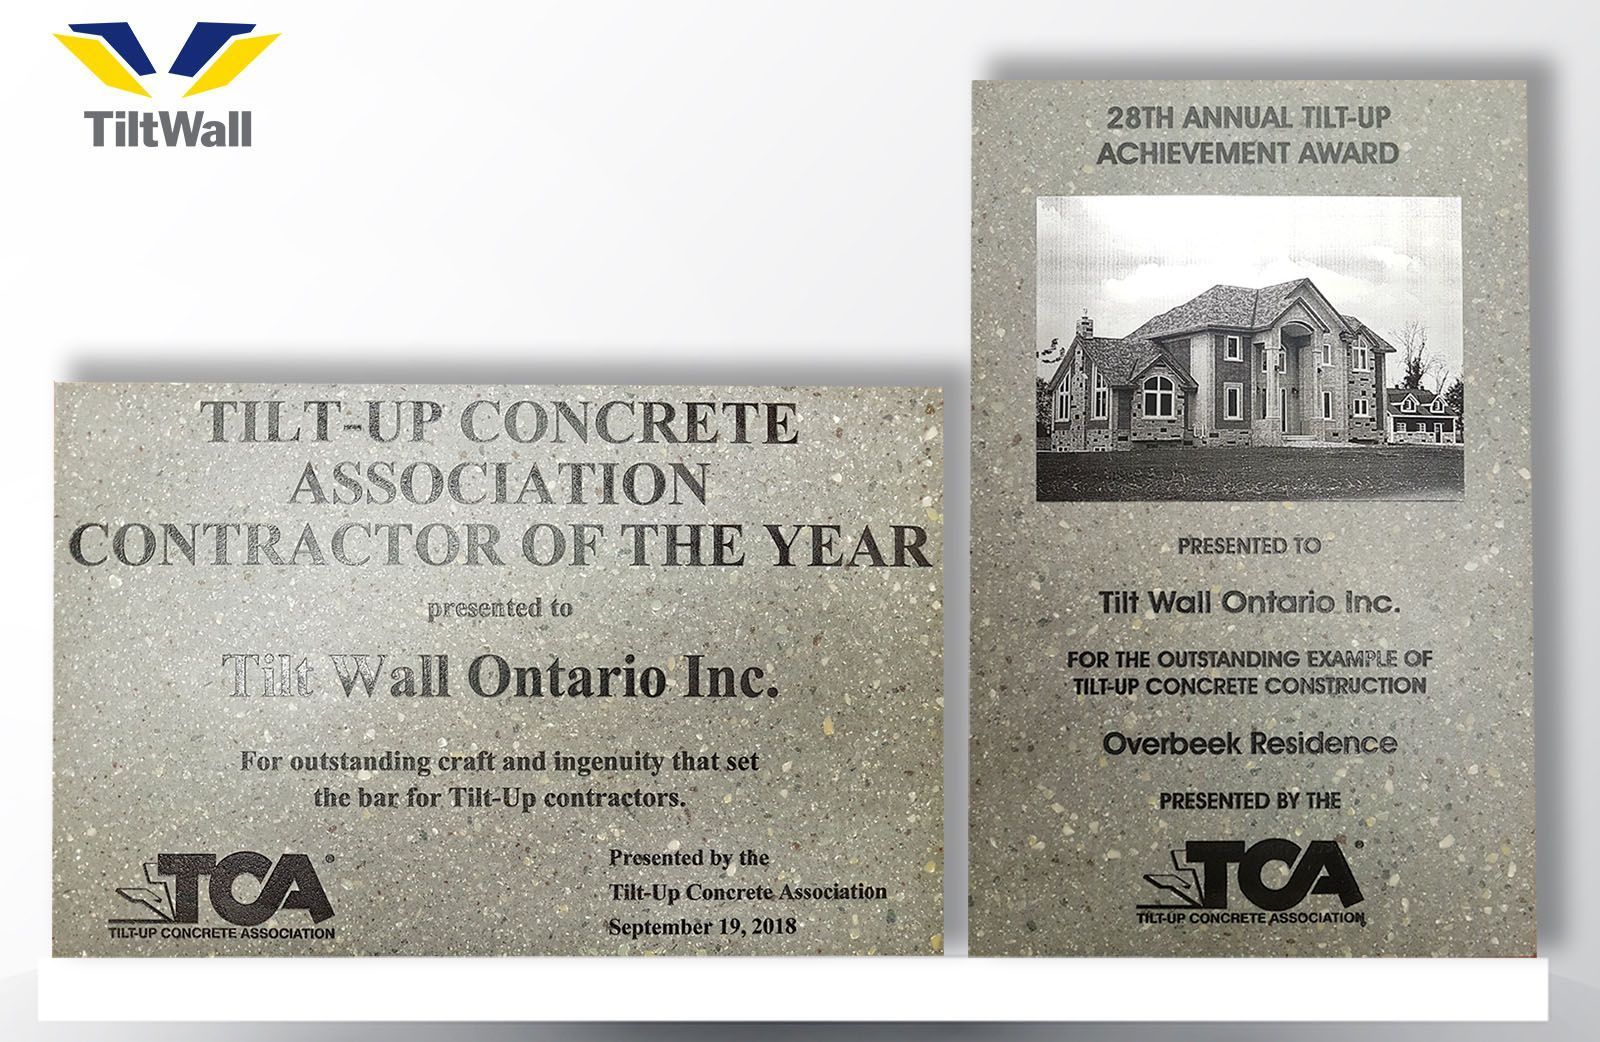 TCA Tilt-Up Awards - Tilt Wall Ontario